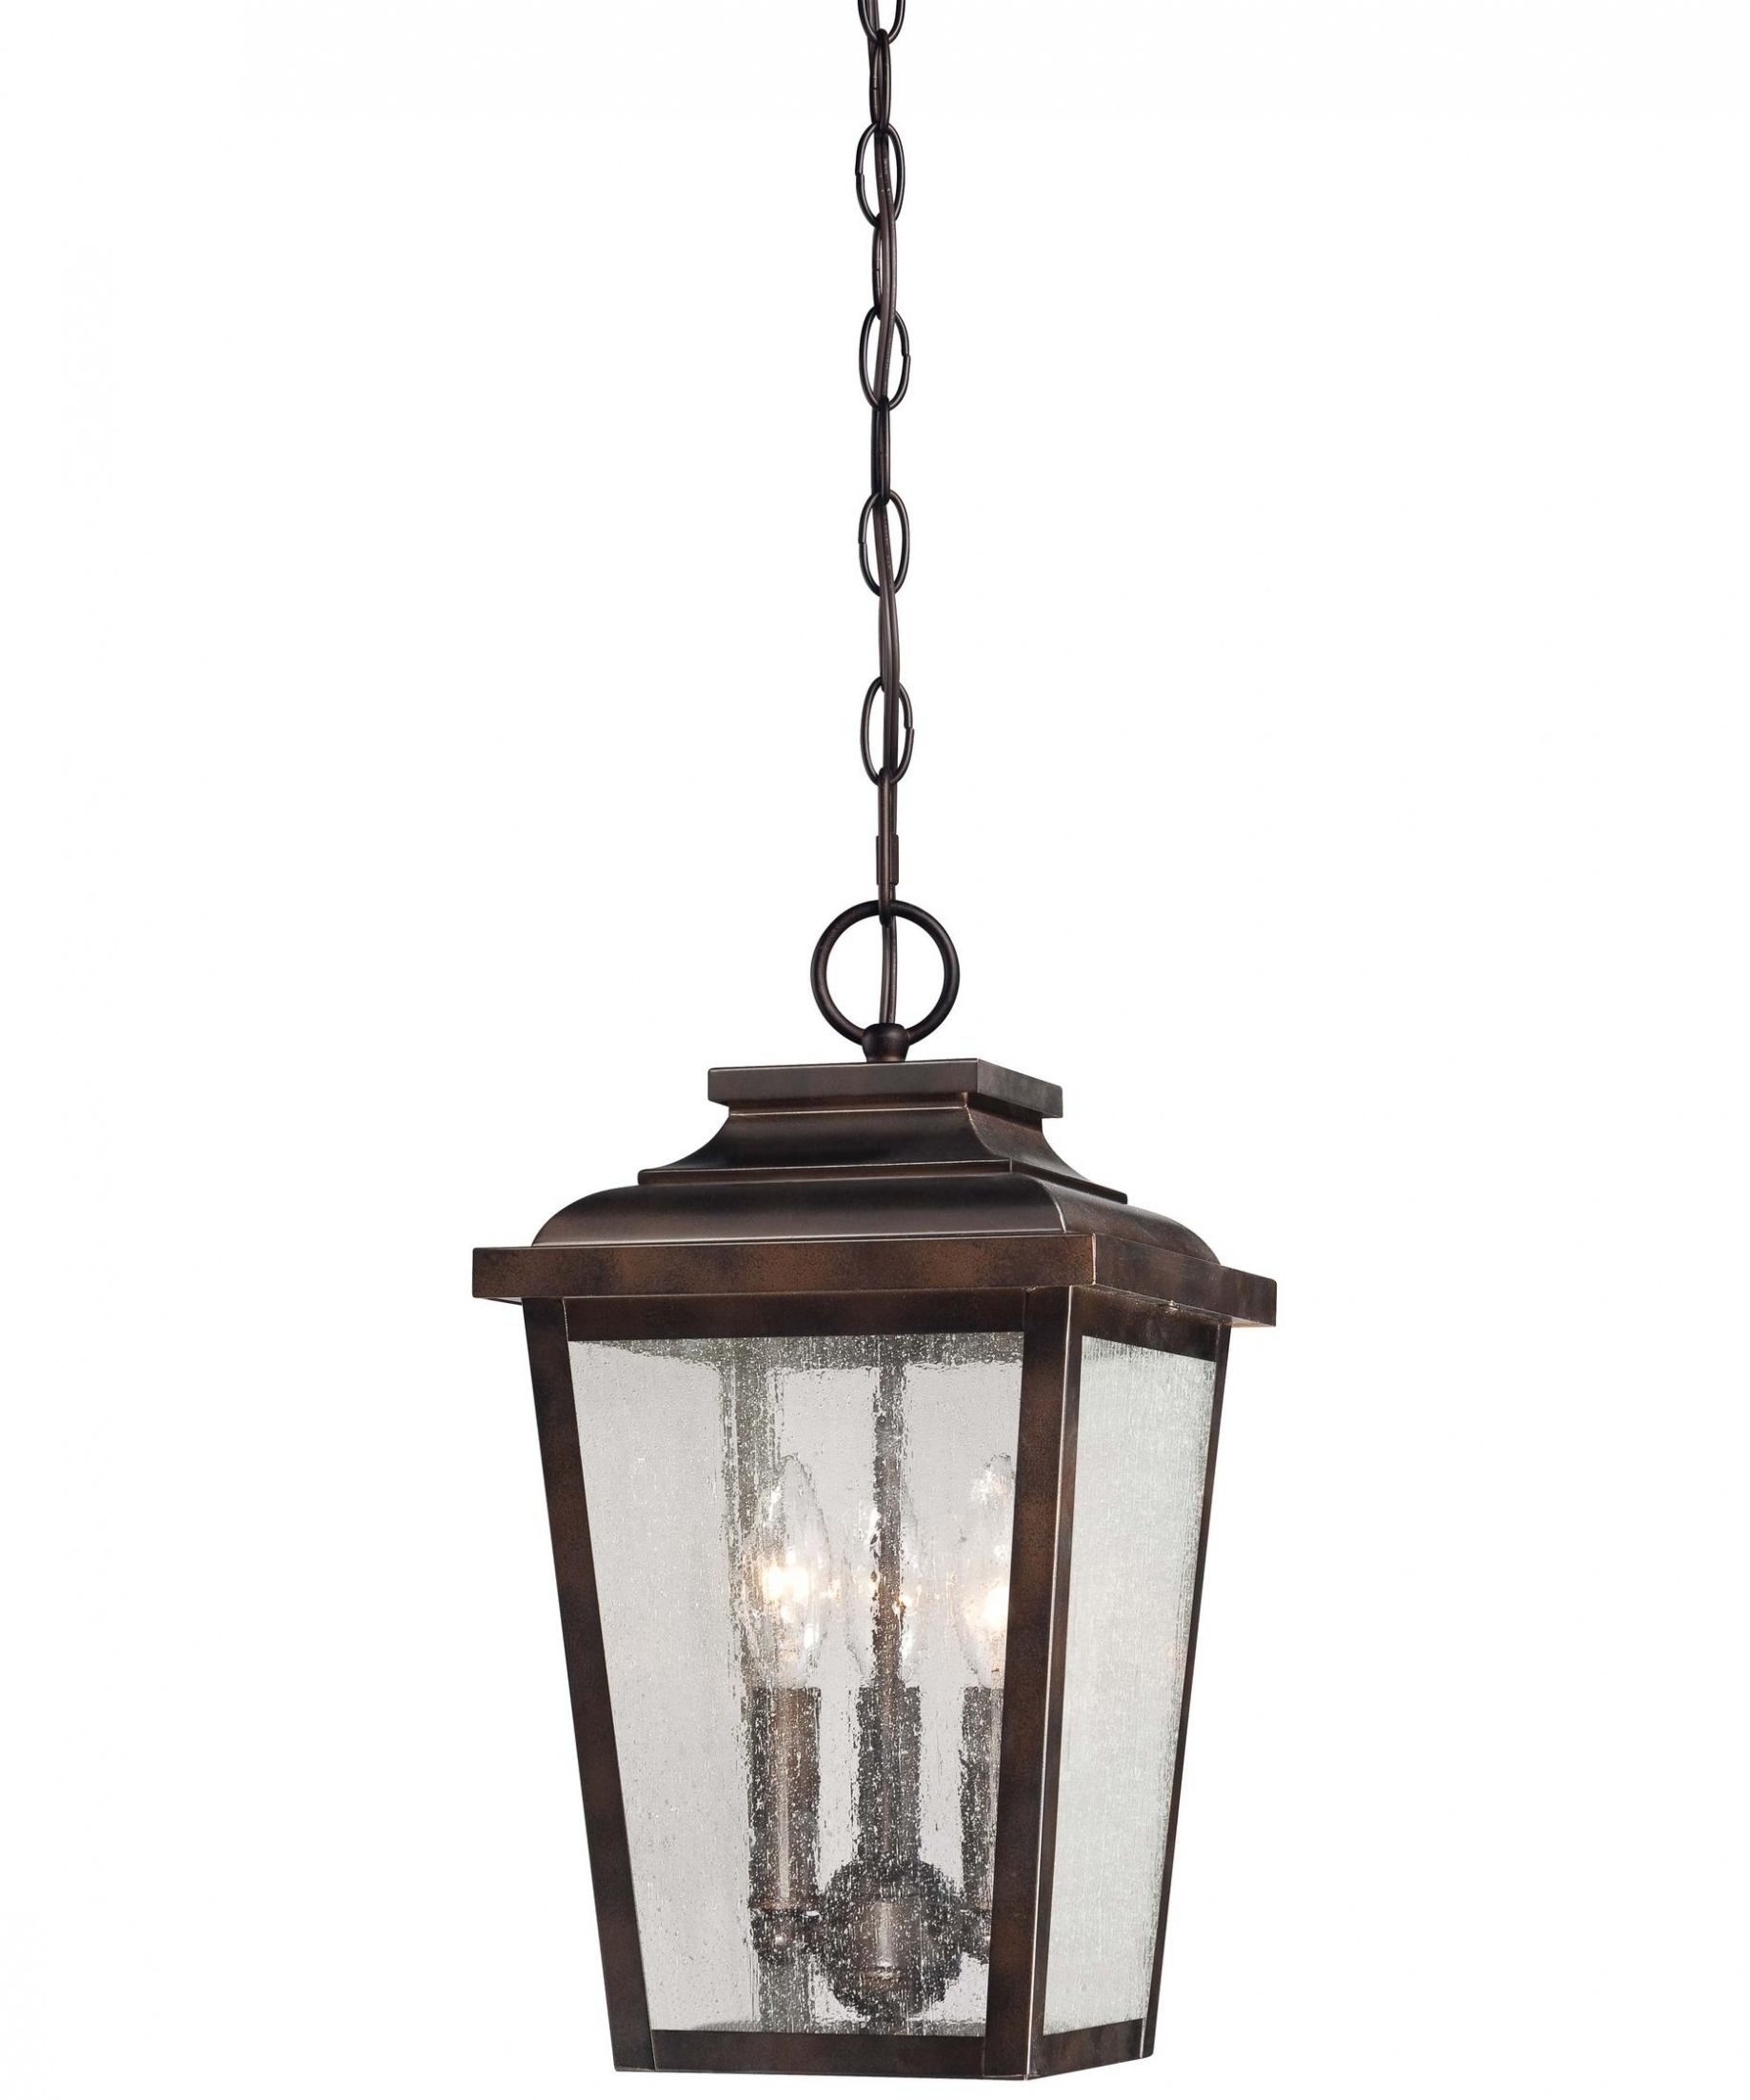 Lamp & Lighting: Hanging Outdoor Porch Light Fixtures • Outdoor In Hanging Porch Hinkley Lighting (View 14 of 15)